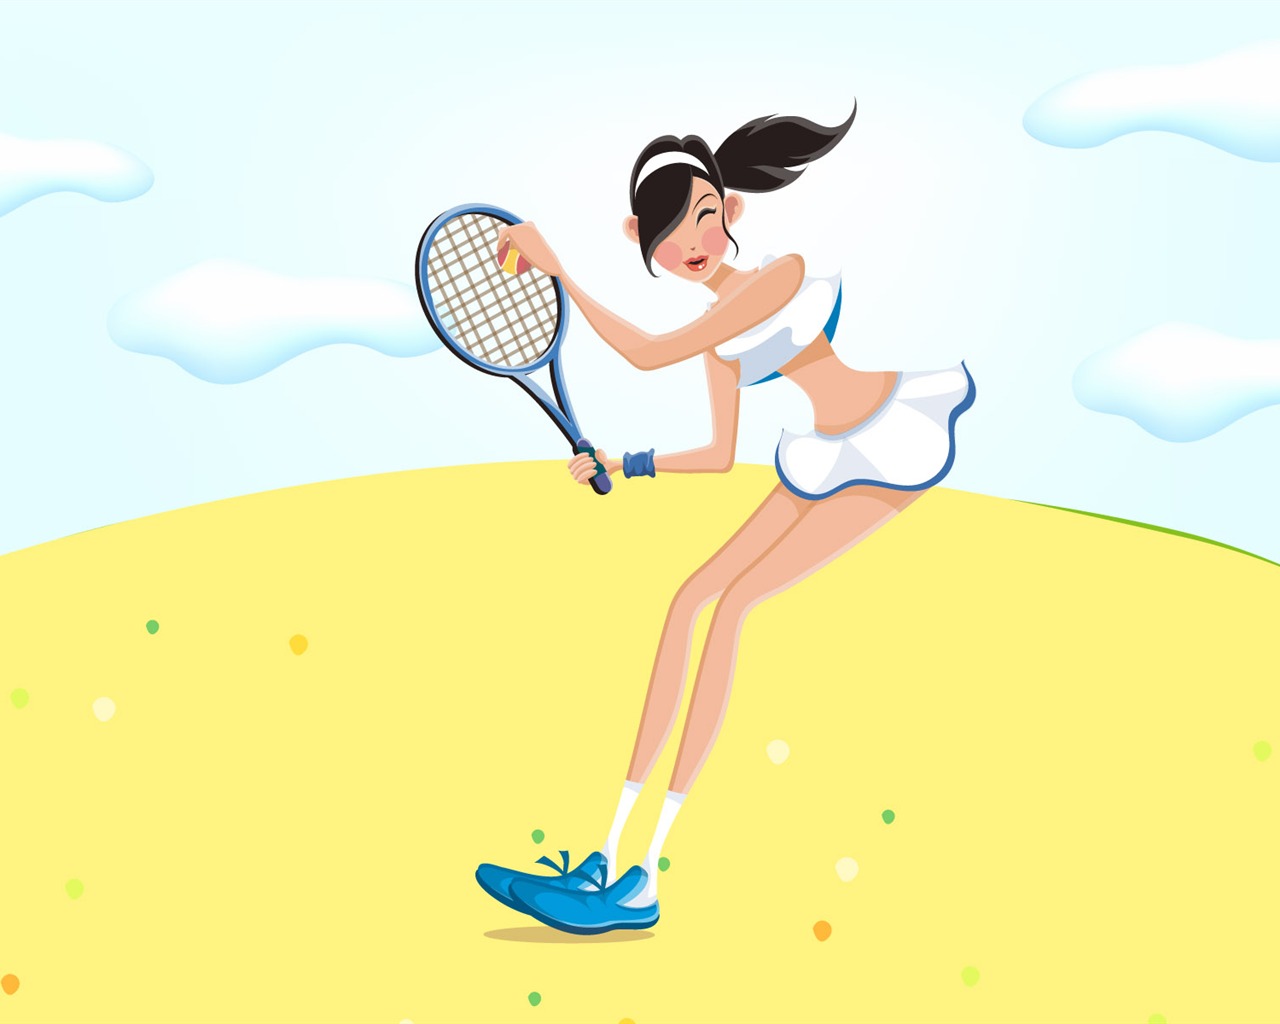 Women's leisure sports vector #13 - 1280x1024